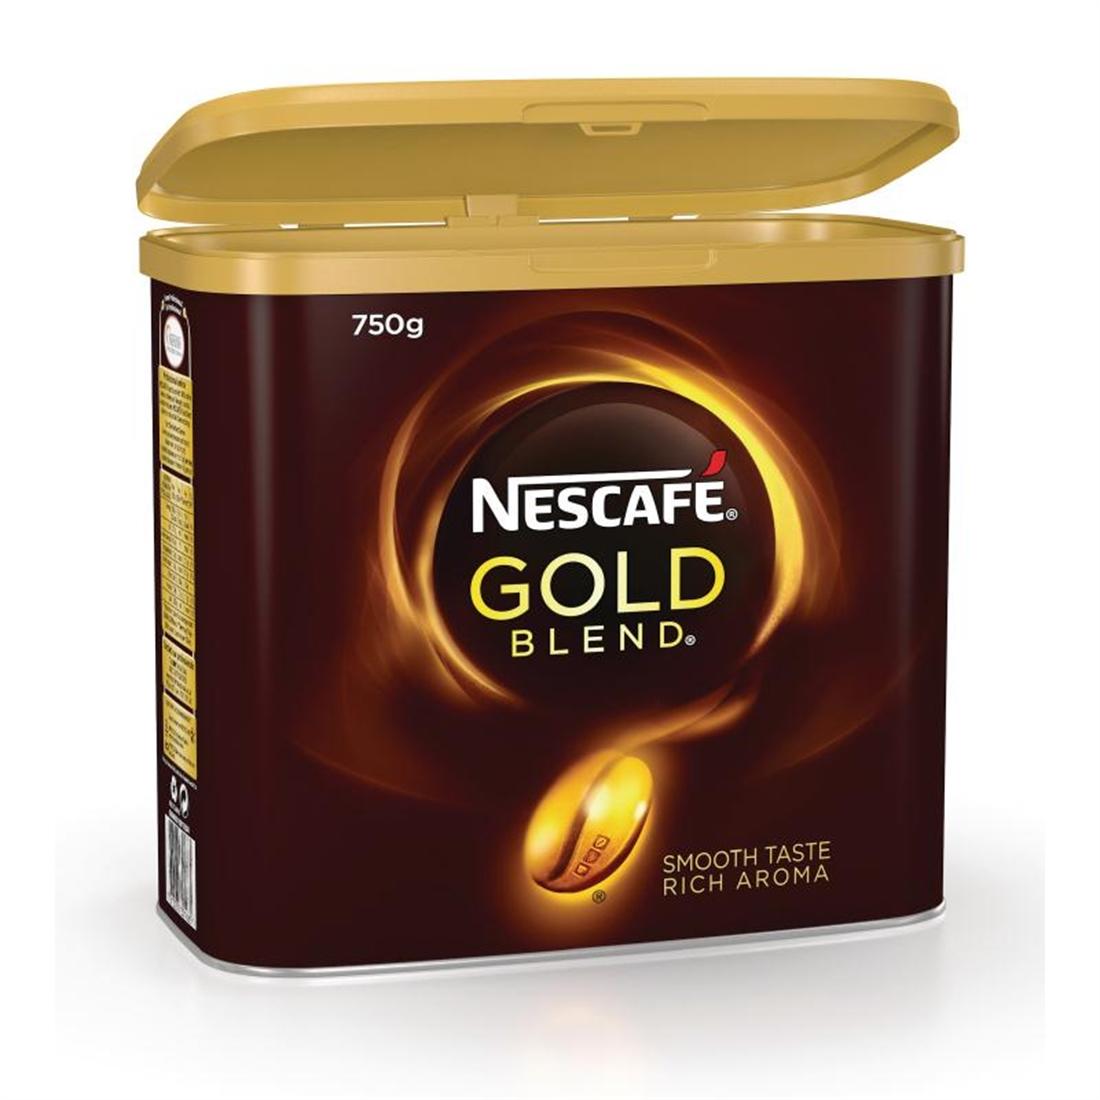 Nescafe Gold Blend Coffee - GC599  - 2